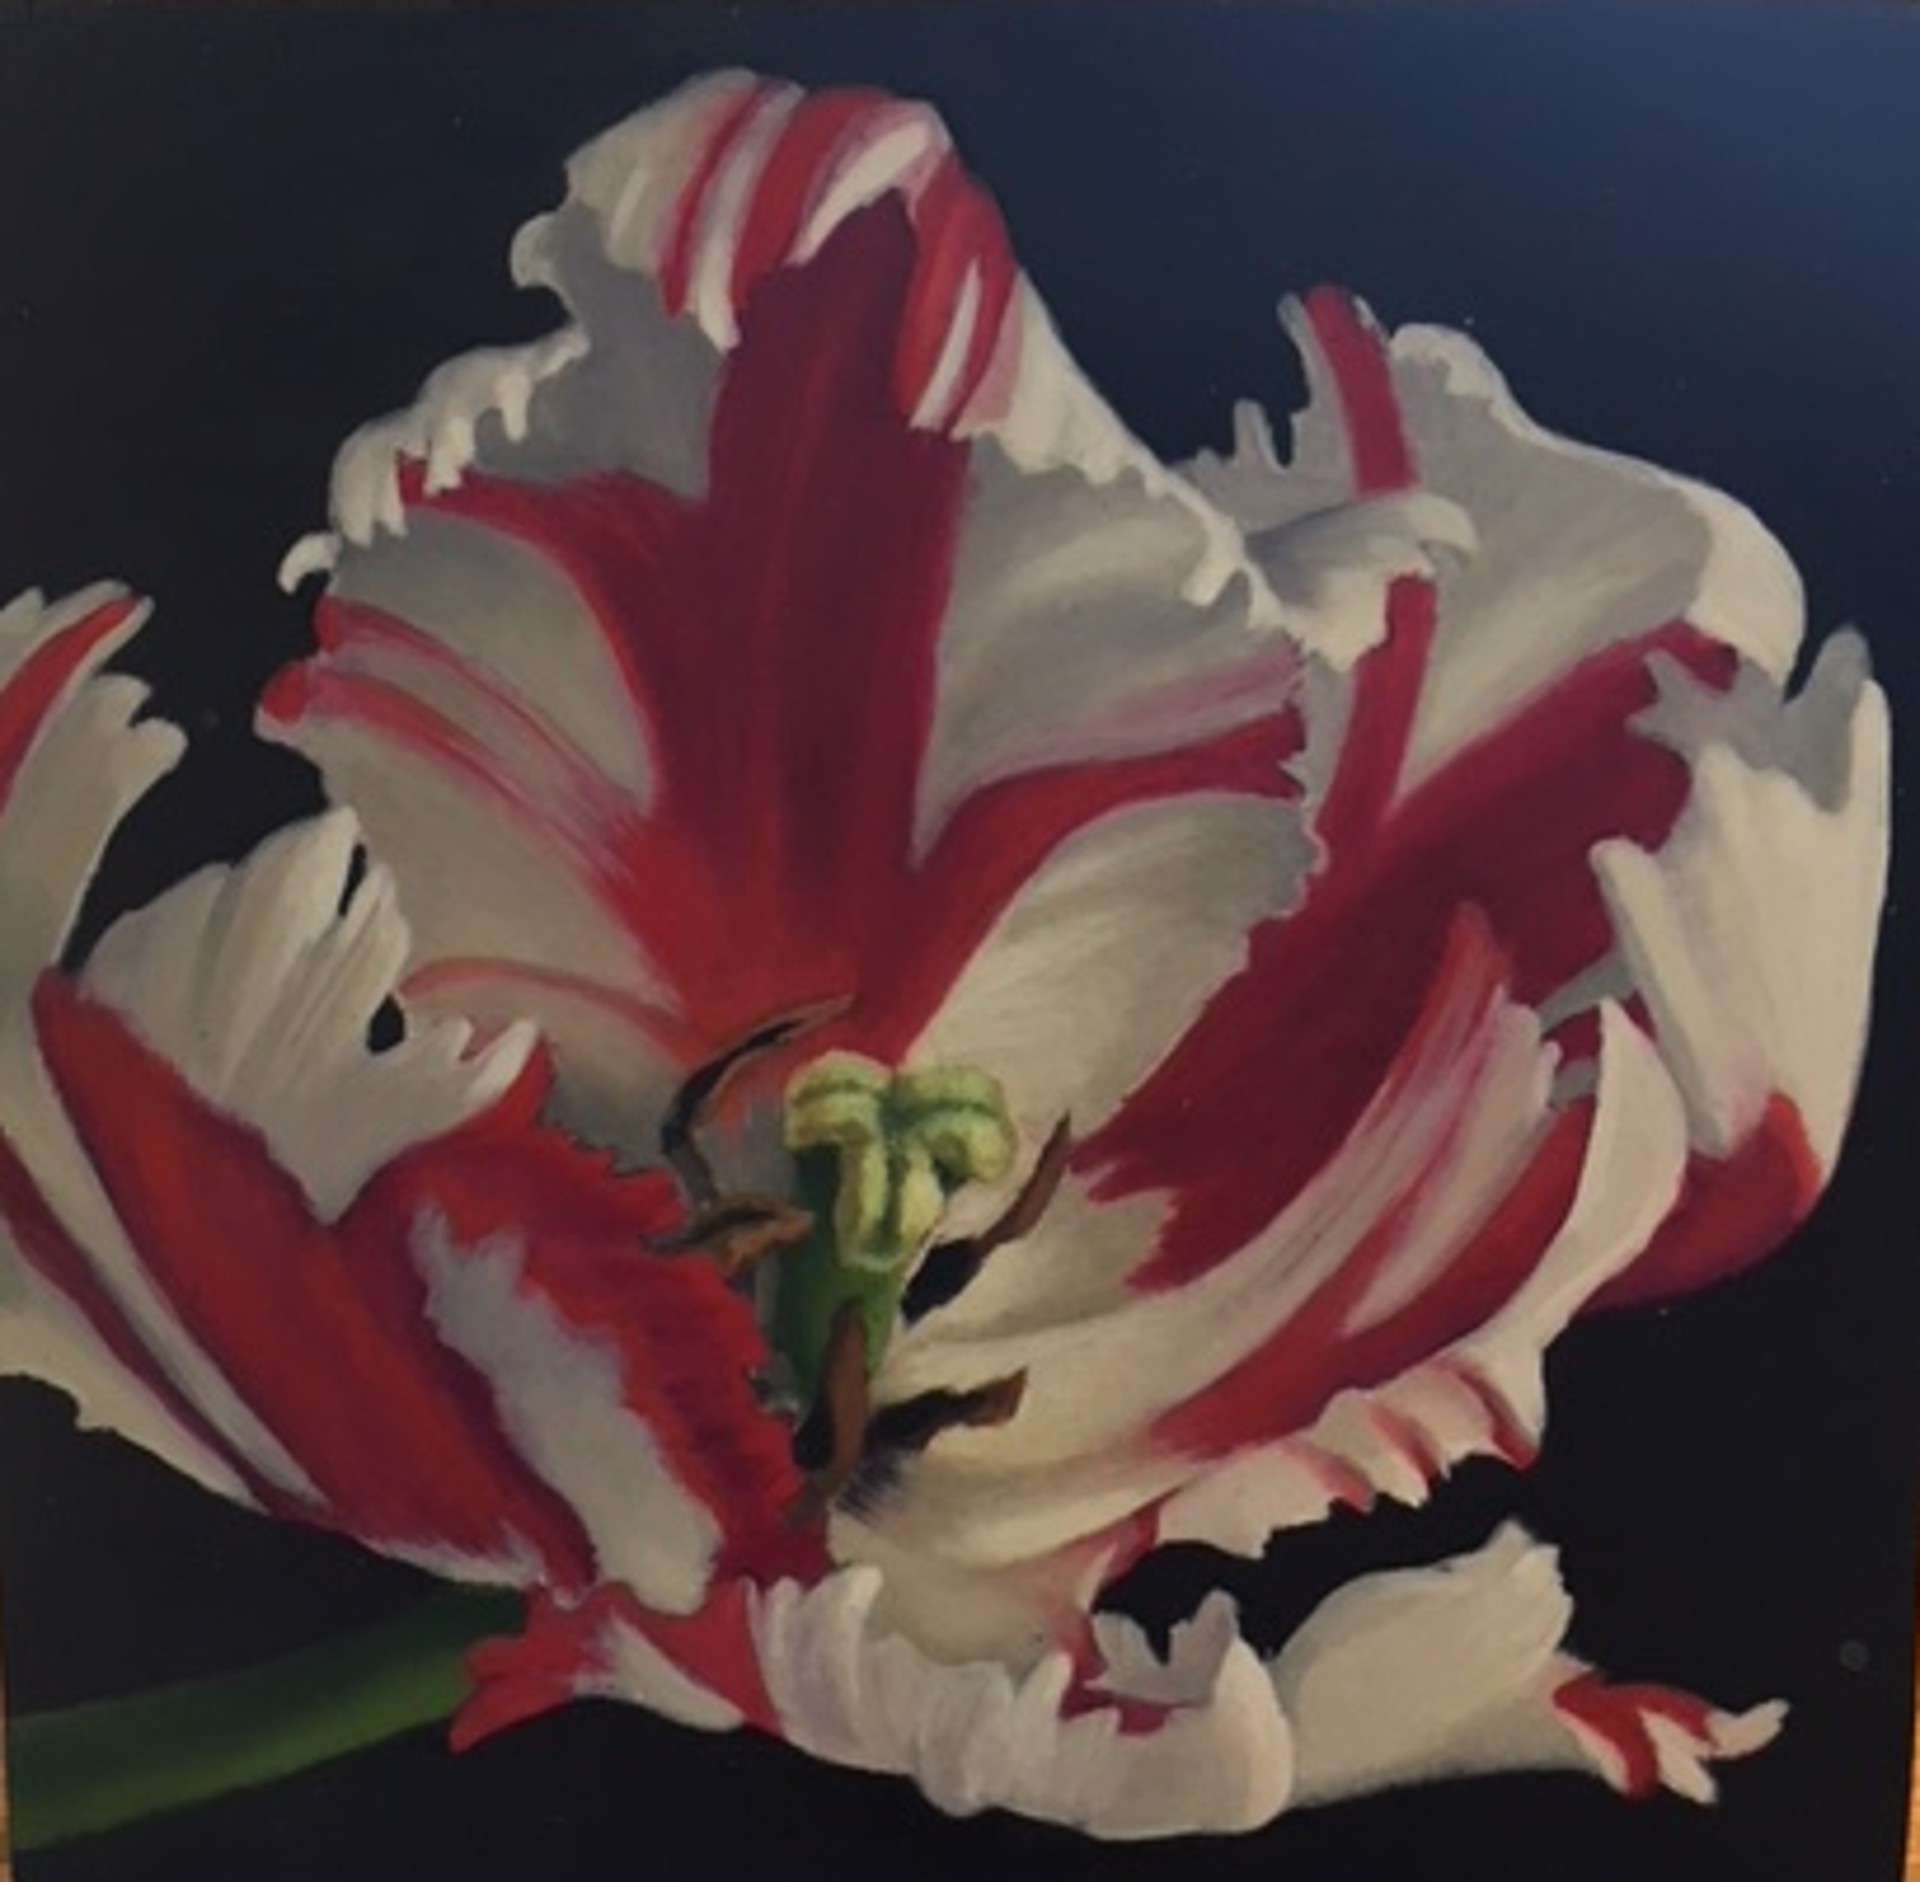 Candy Cane Tulip by Sarah van der Helm